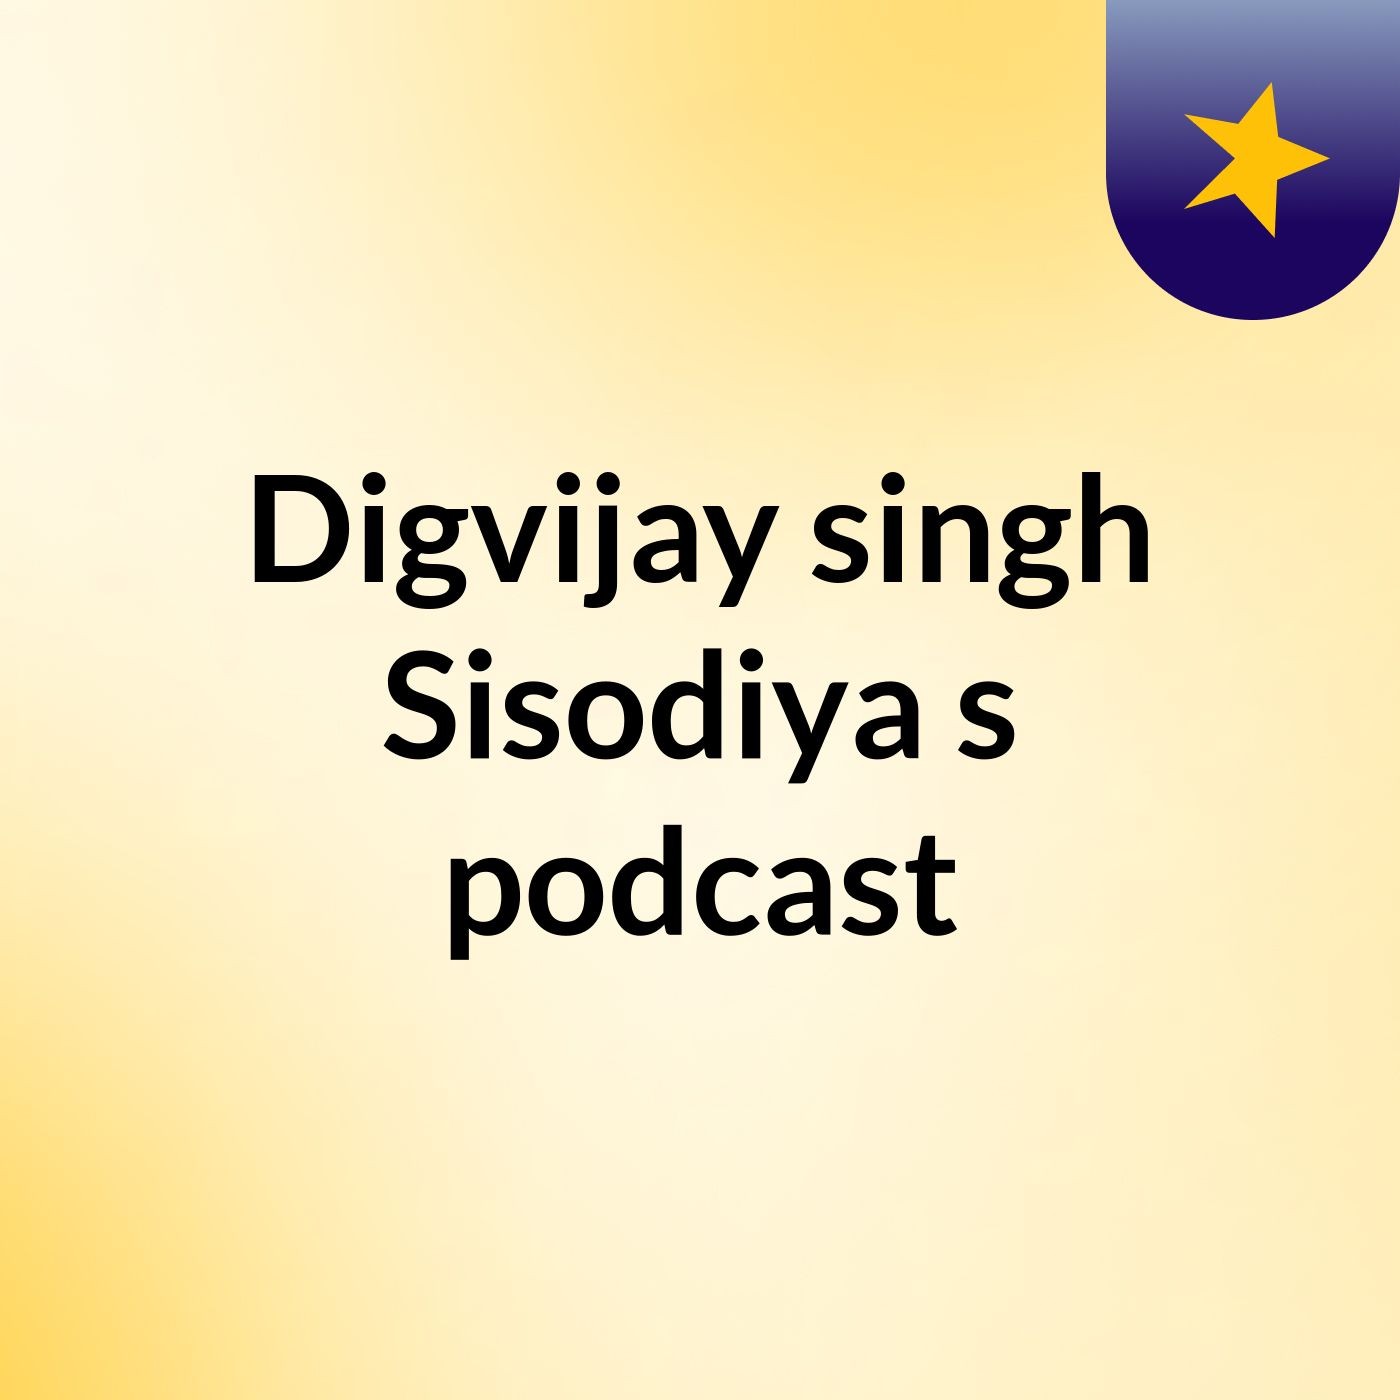 Episode 16 - Digvijay singh Sisodiya's podcast